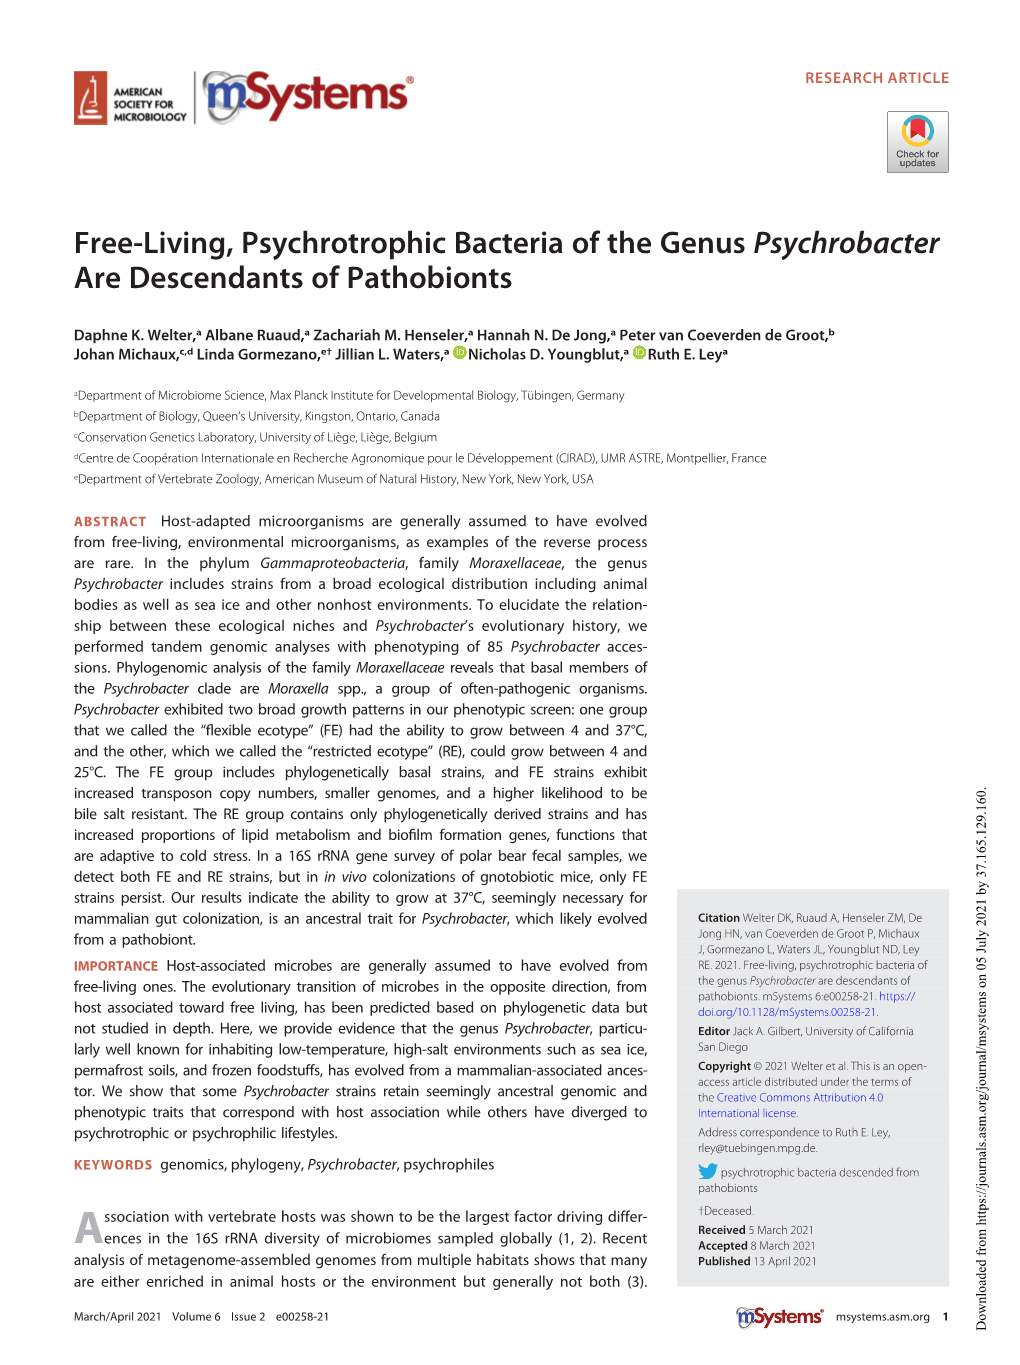 Free-Living, Psychrotrophic Bacteria of the Genus Psychrobacter Are Descendants of Pathobionts